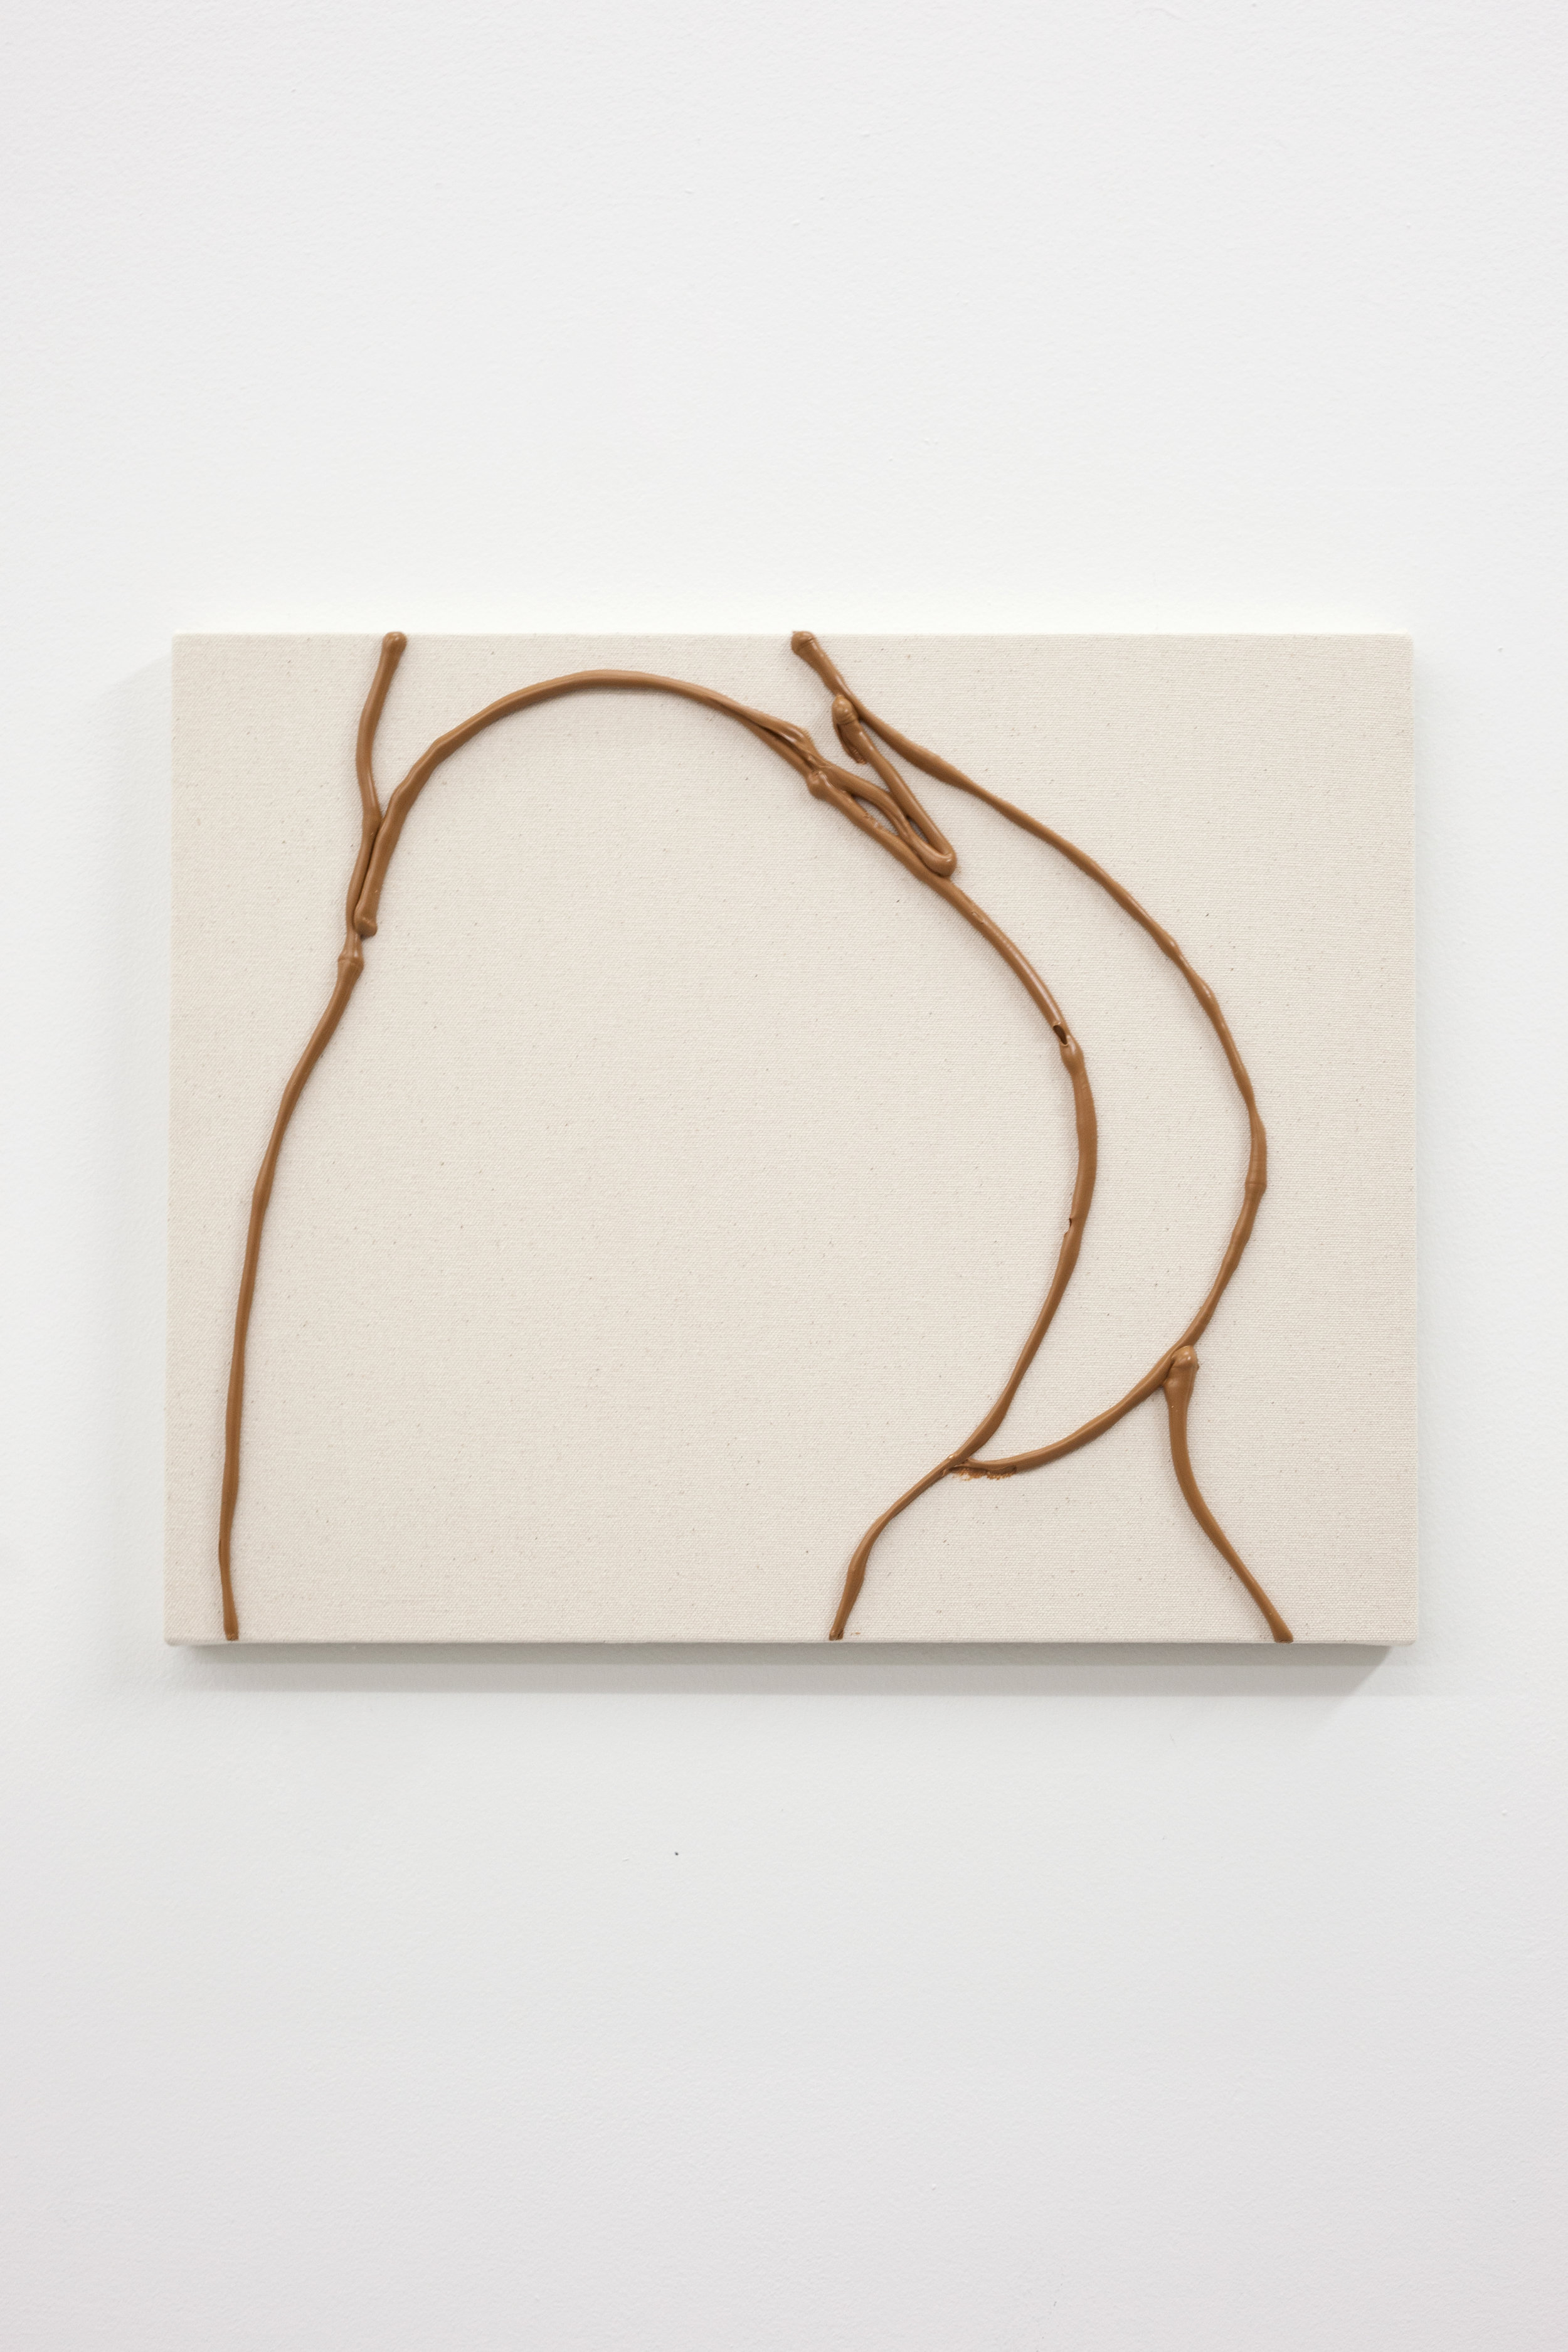  Omari Douglin,  Untitled (Butt Painting),  2019, Caulk on Raw Canvas, 13x16in 